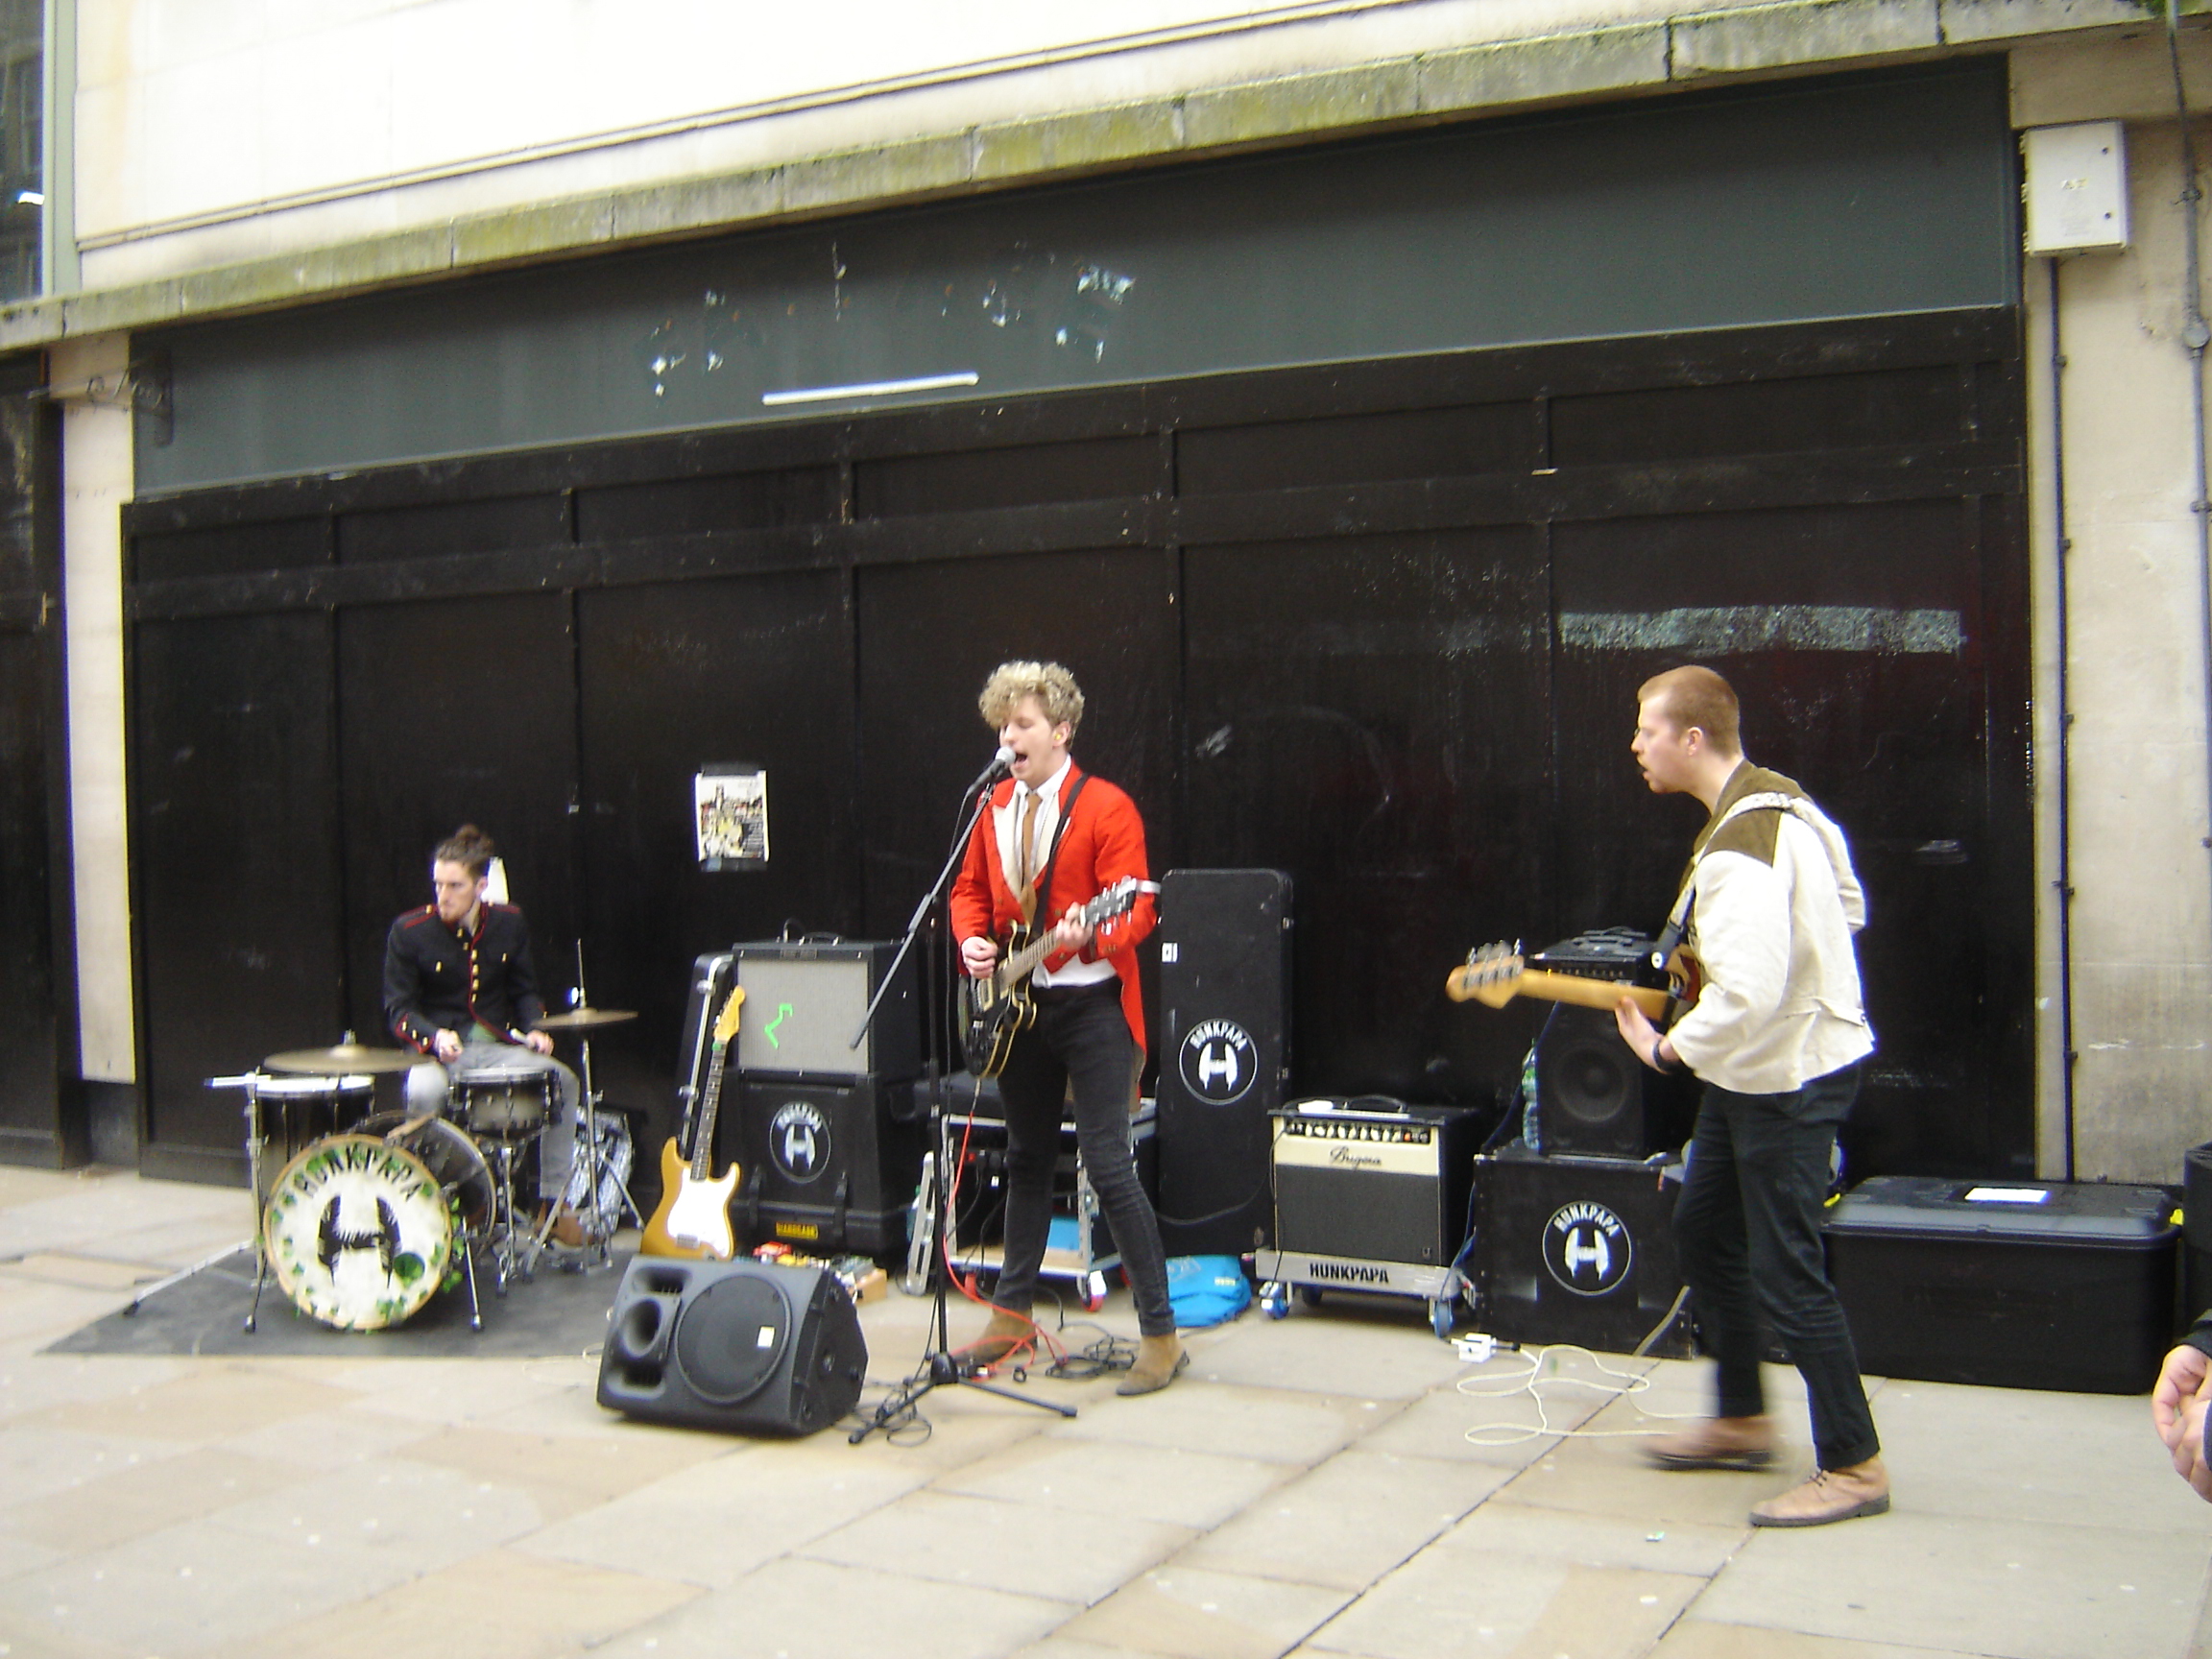 Hunkpapa playing in Cornmarket Street, Oxford